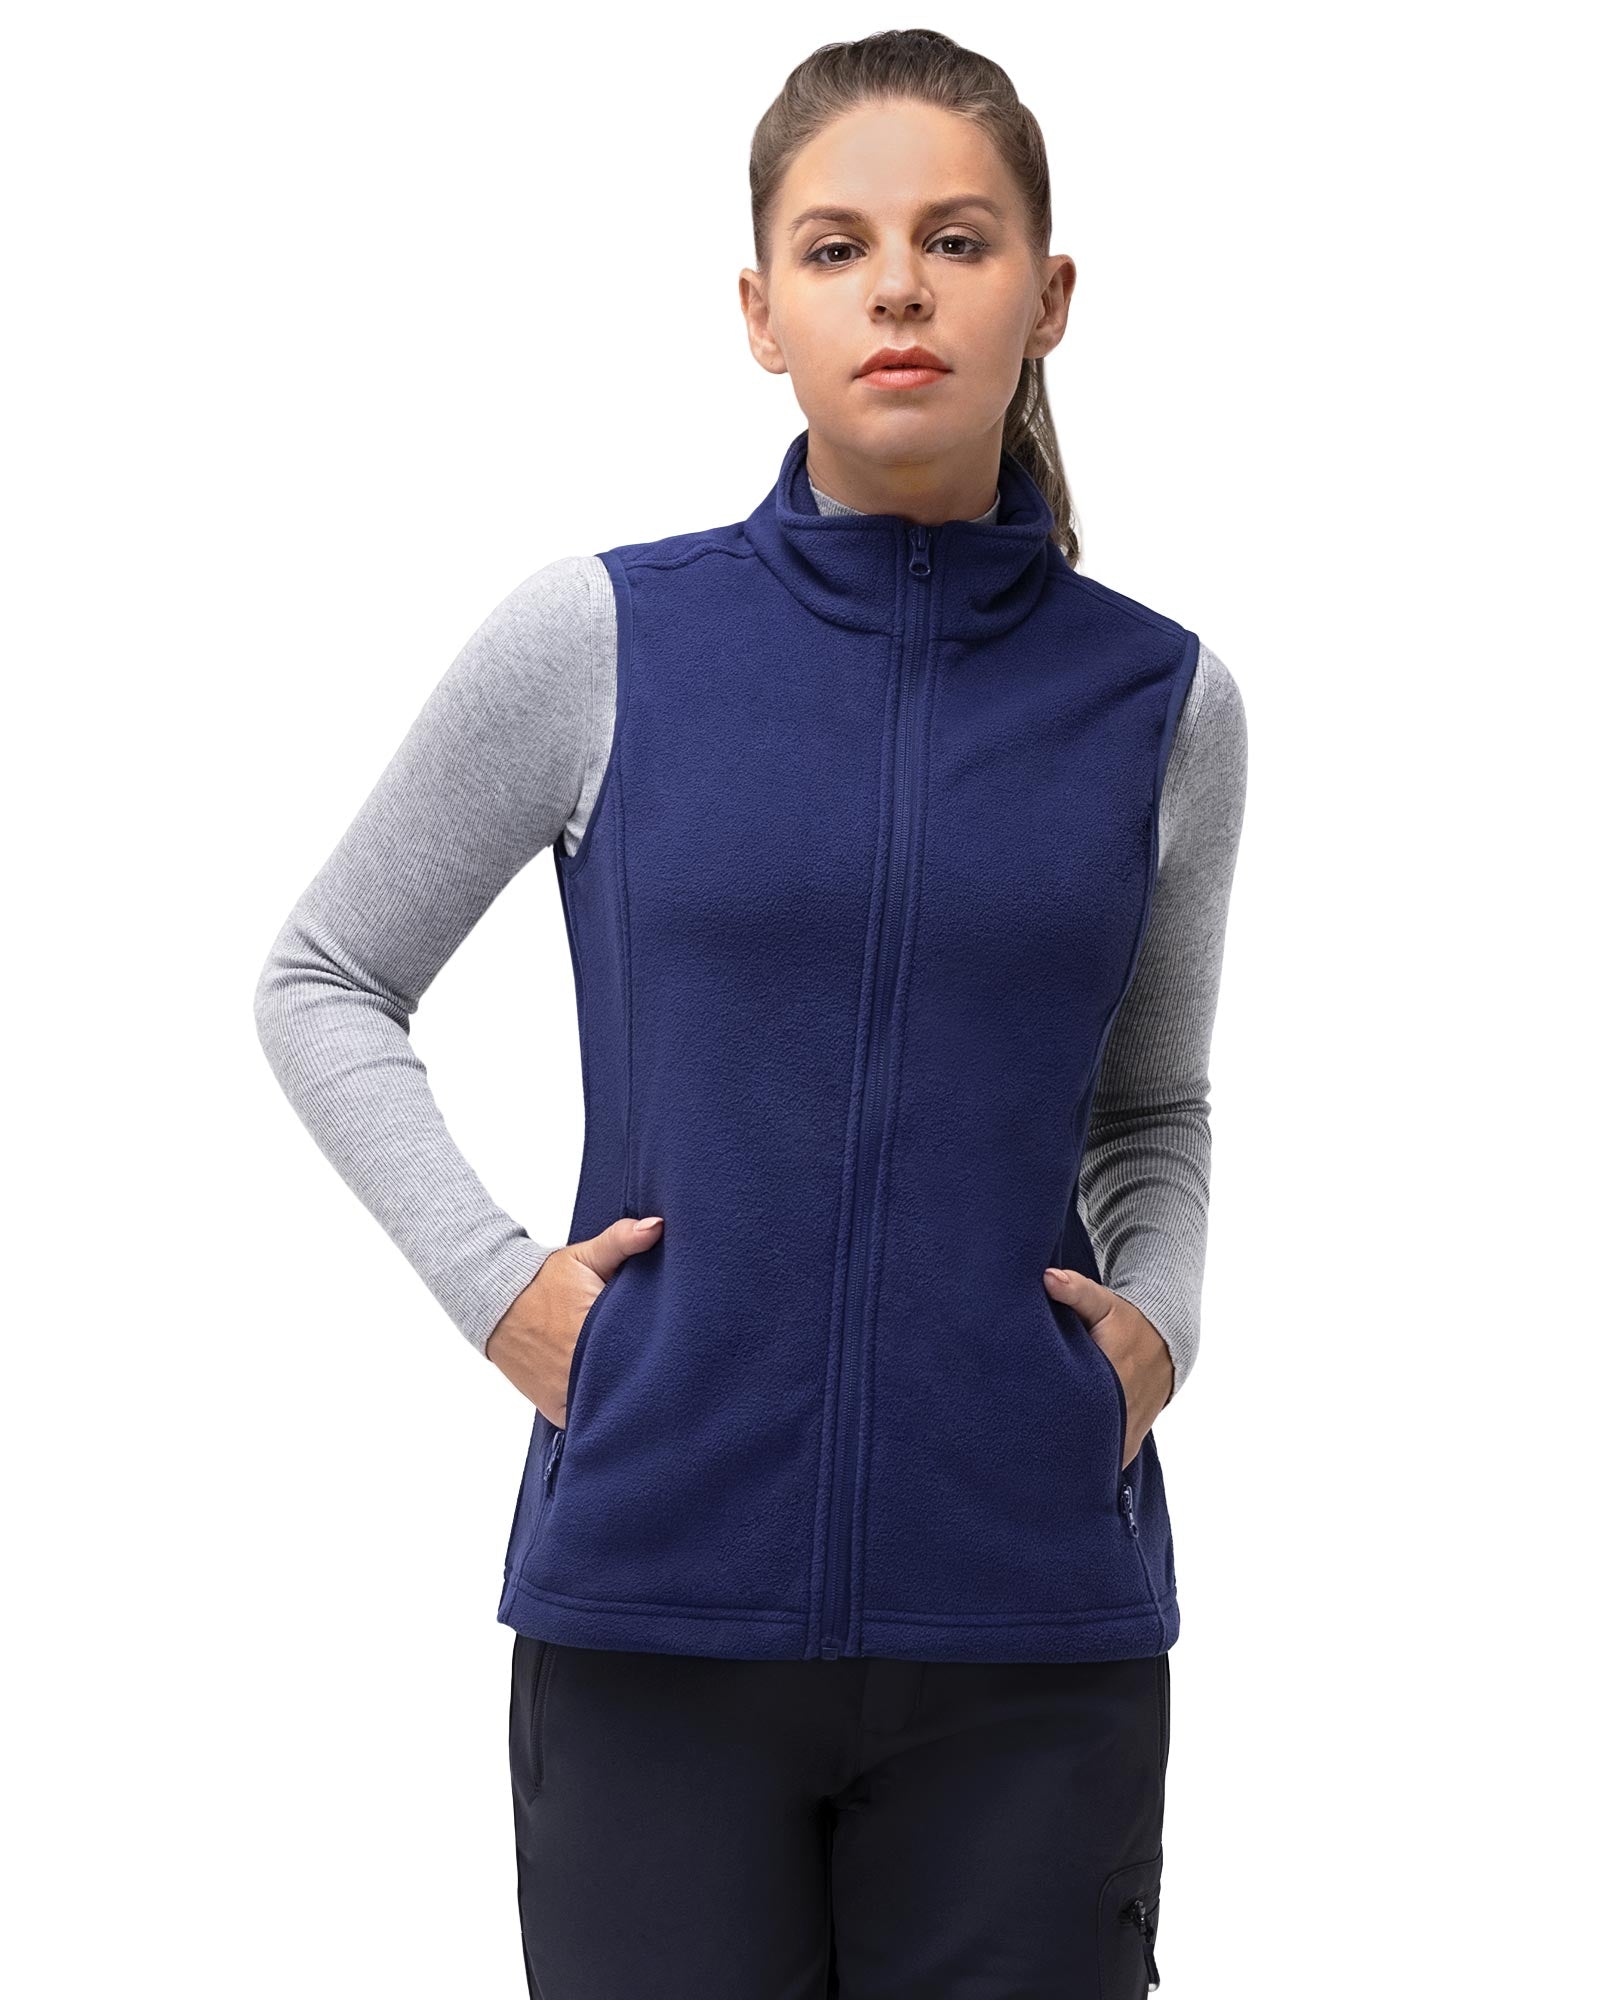 Women's 0.82 lbs Fleece Gilet Vest Outerwear with 4 Deep Pockets – 33,000ft